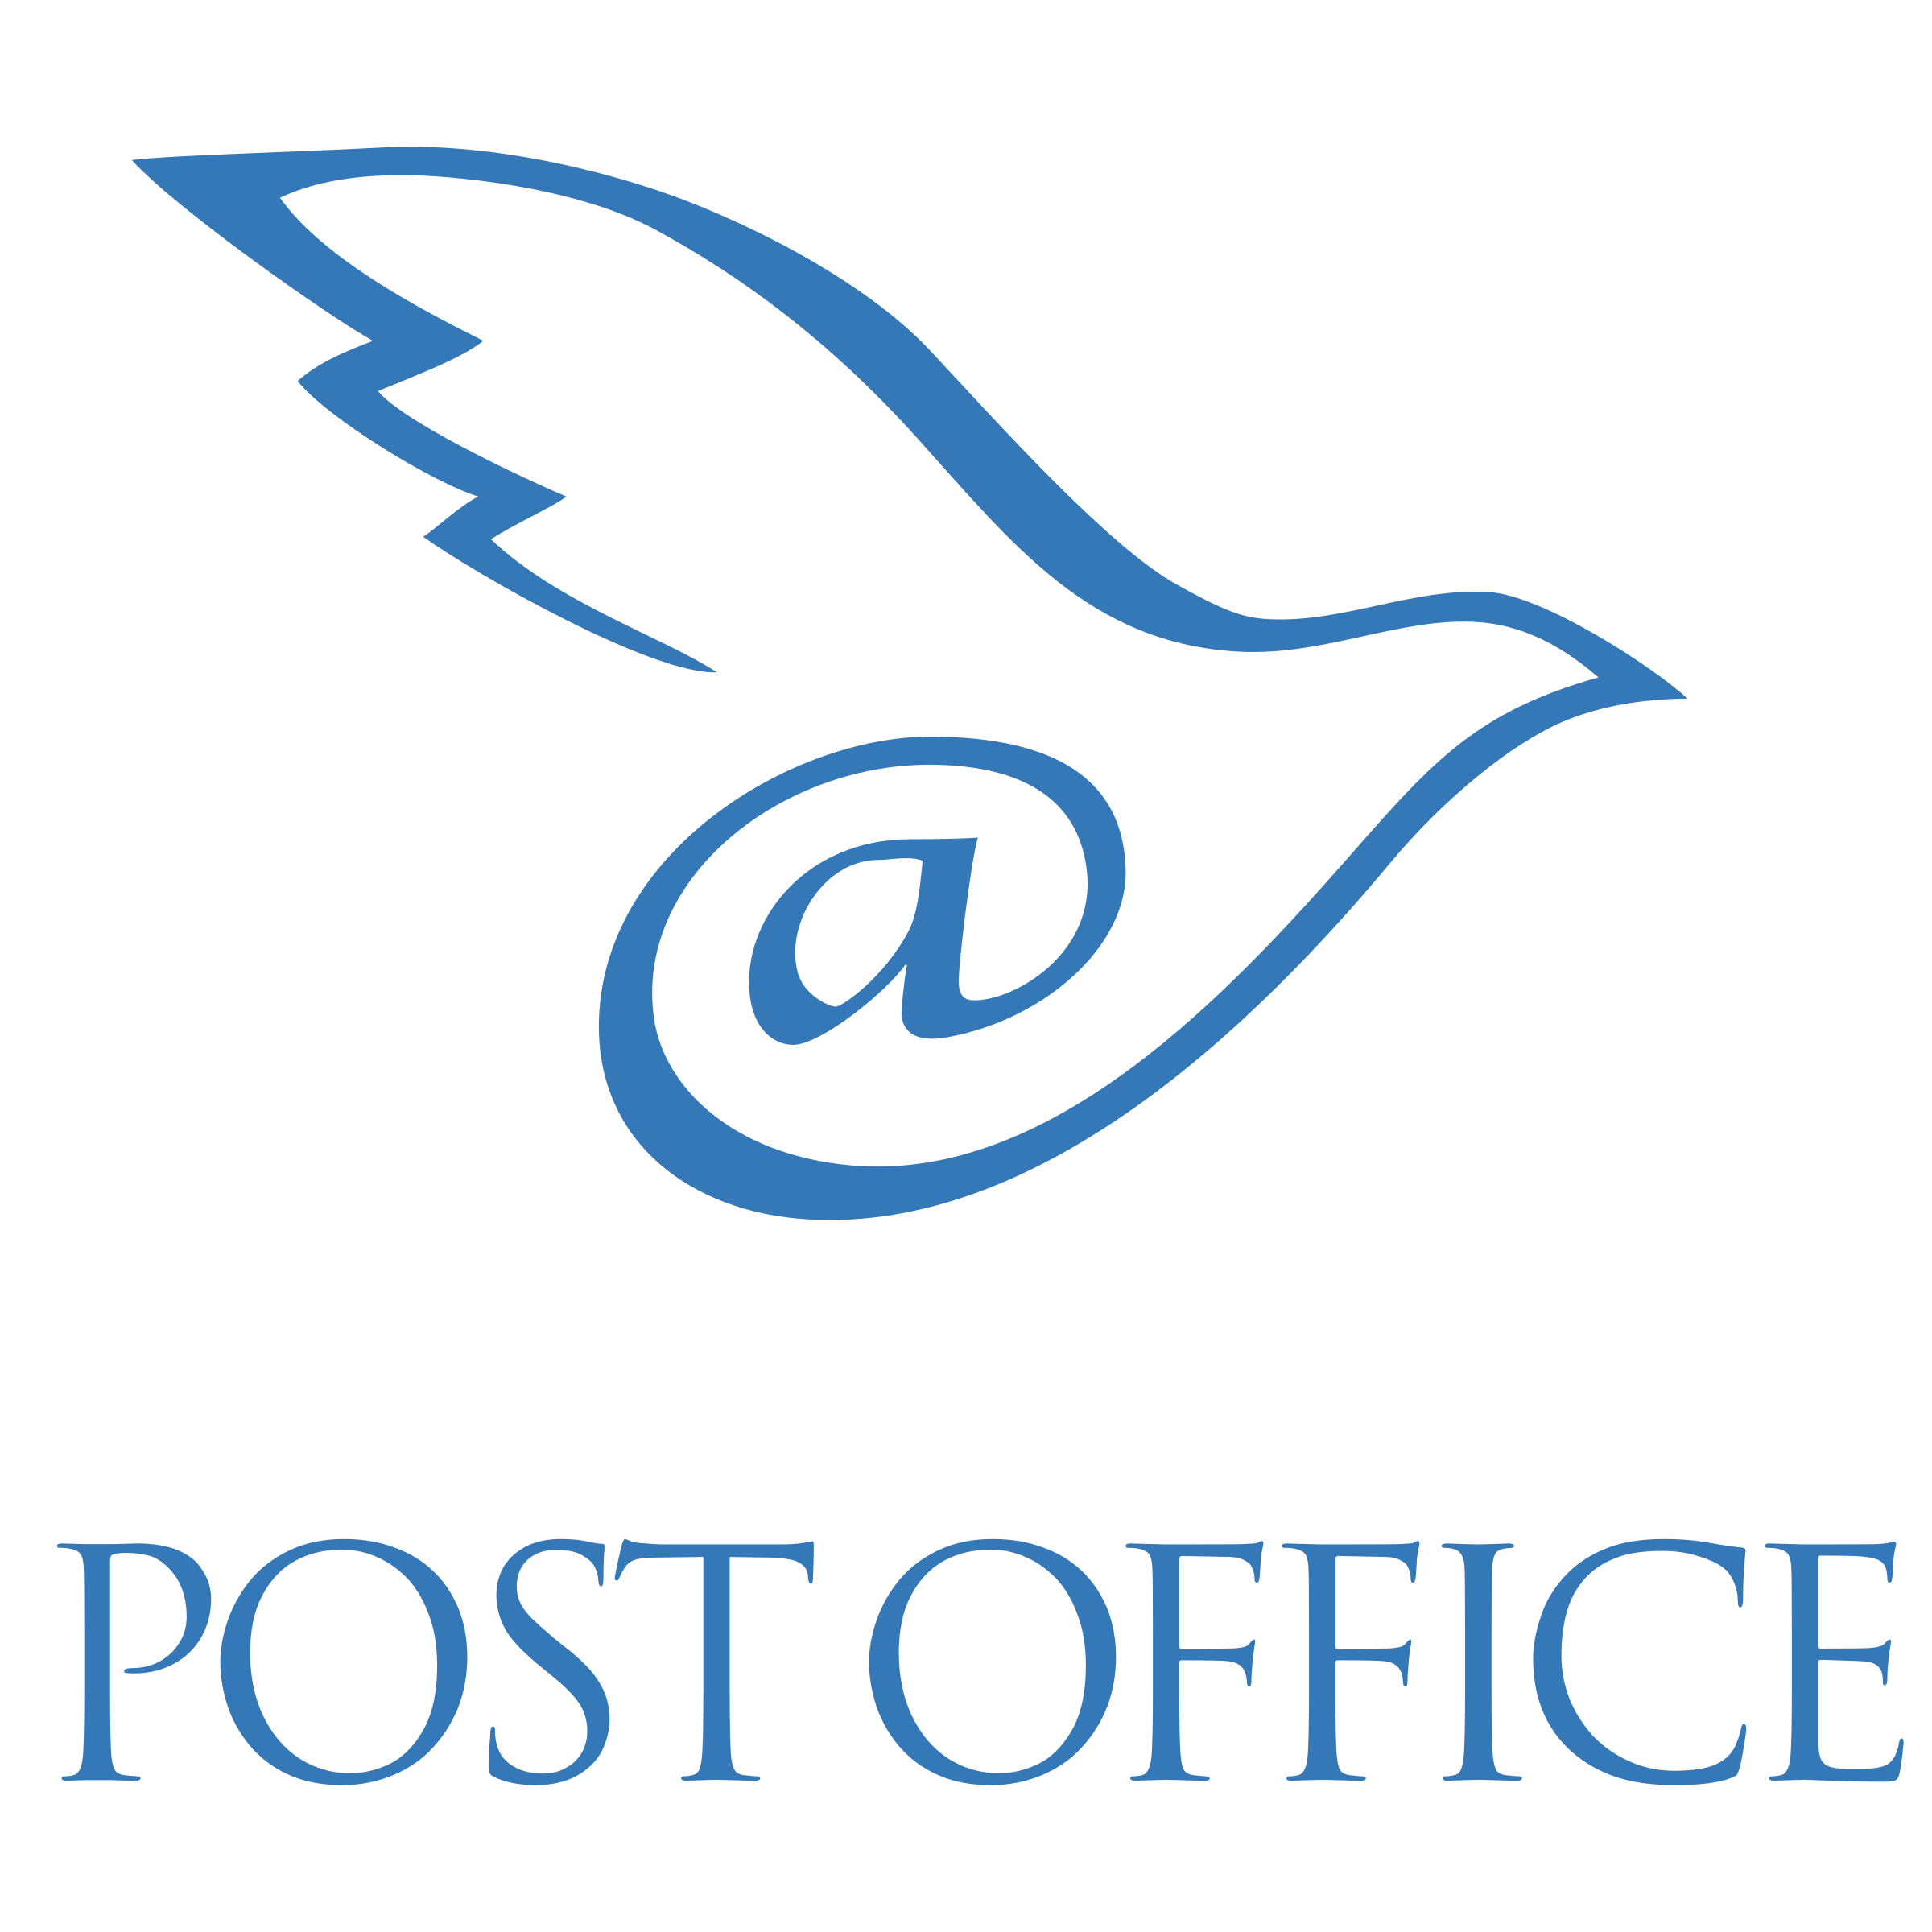 Post Office Logo - Post Office Logo PNG Transparent & SVG Vector